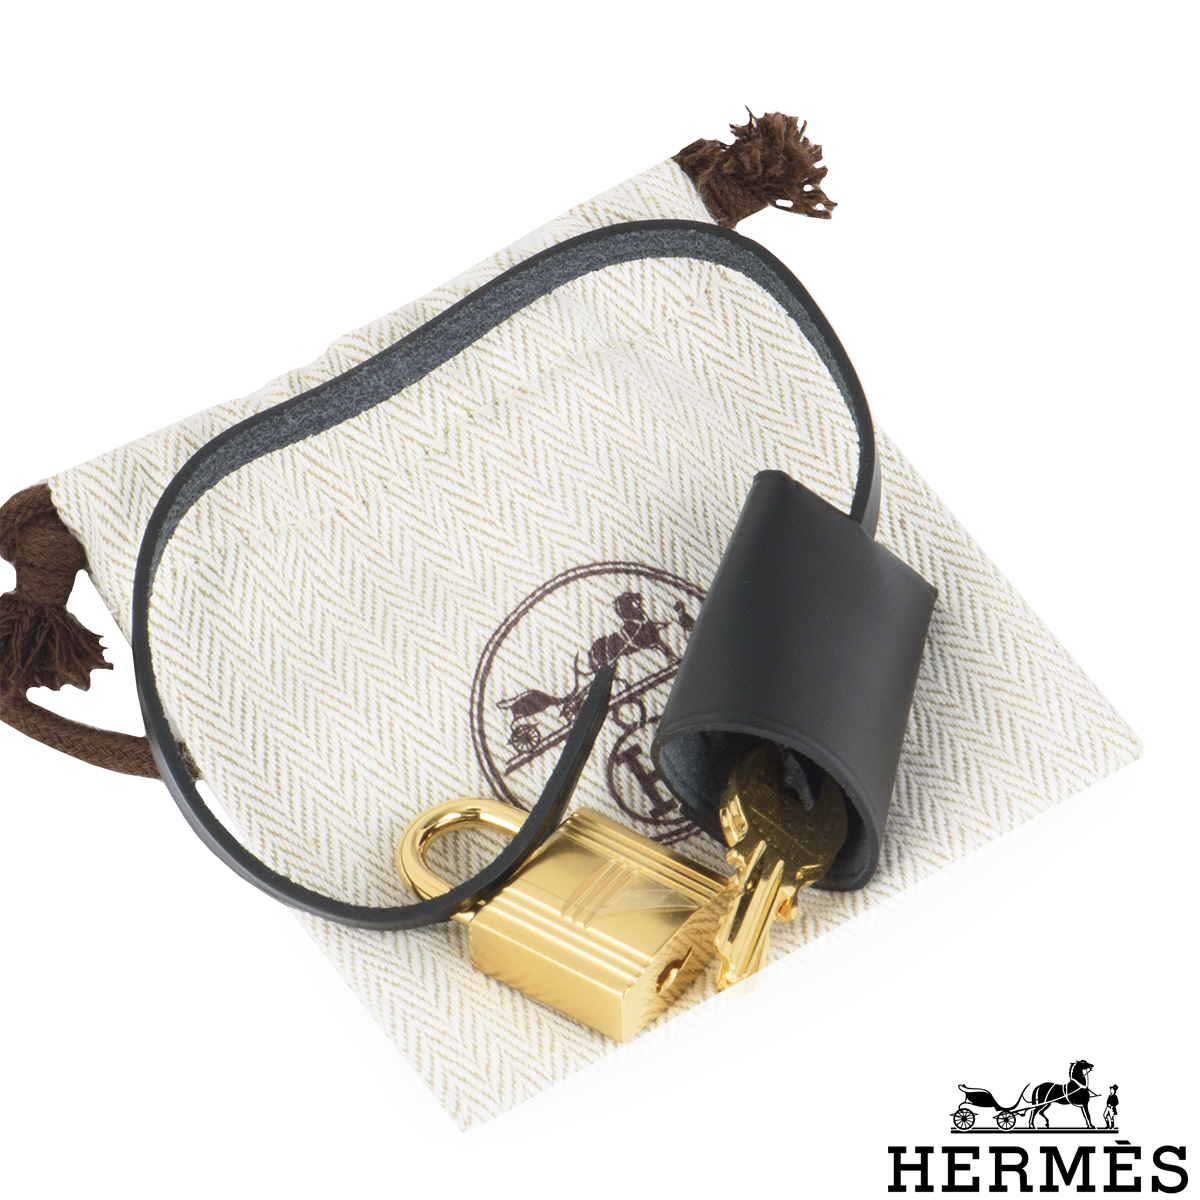 Hermes Herbag Zip 31 in Toile Officier 🛒Not available on webstore